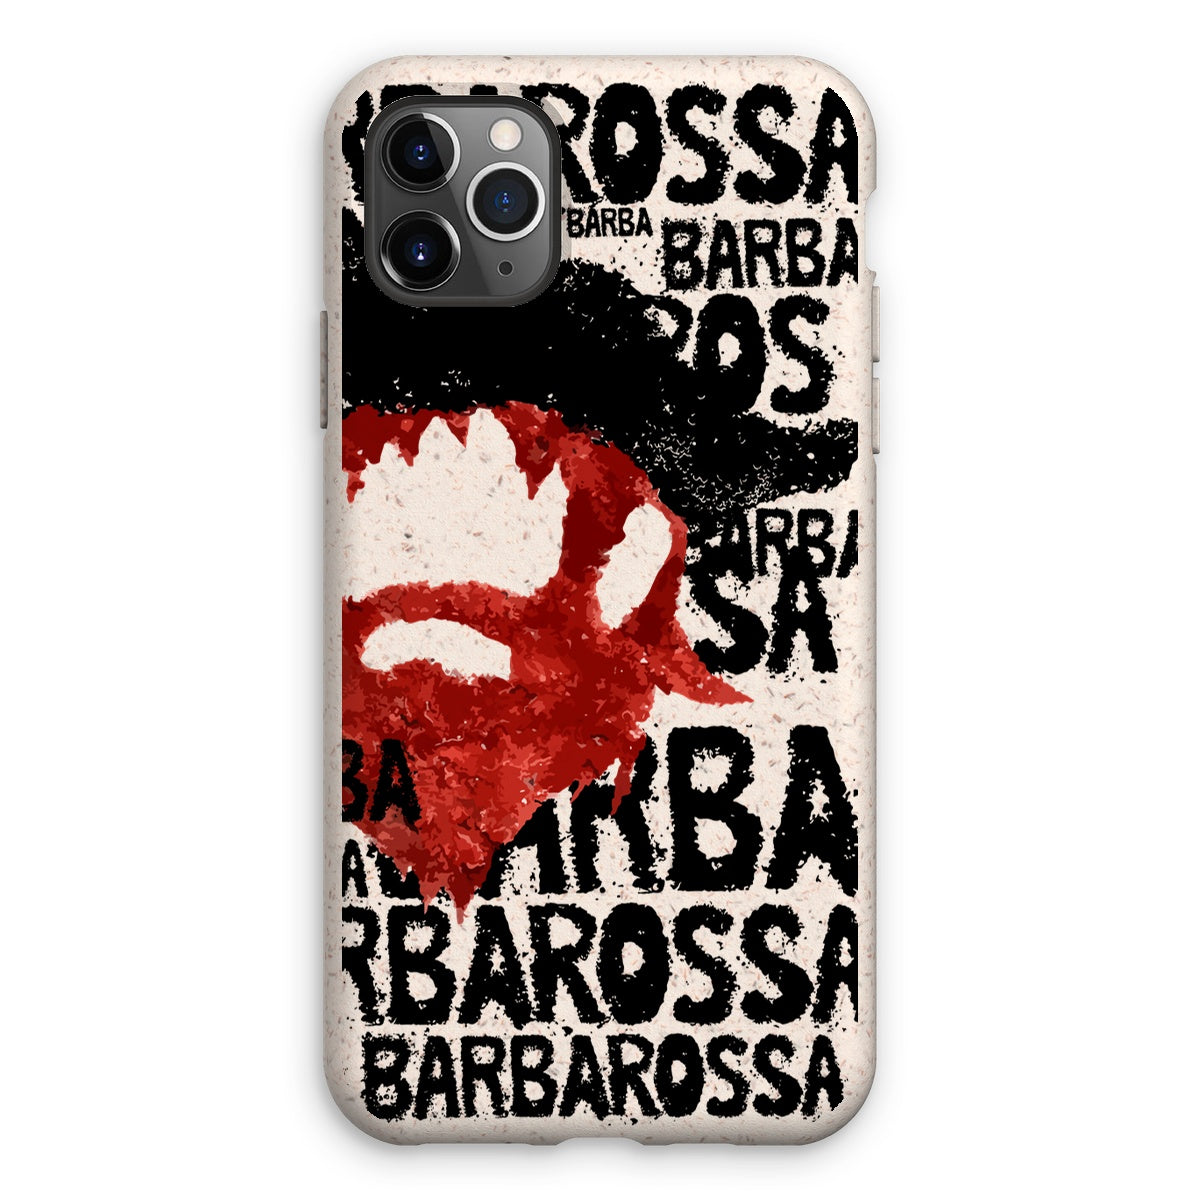 AQUA HMP2 - 01 - Barbarossa - Capa Eco Phone